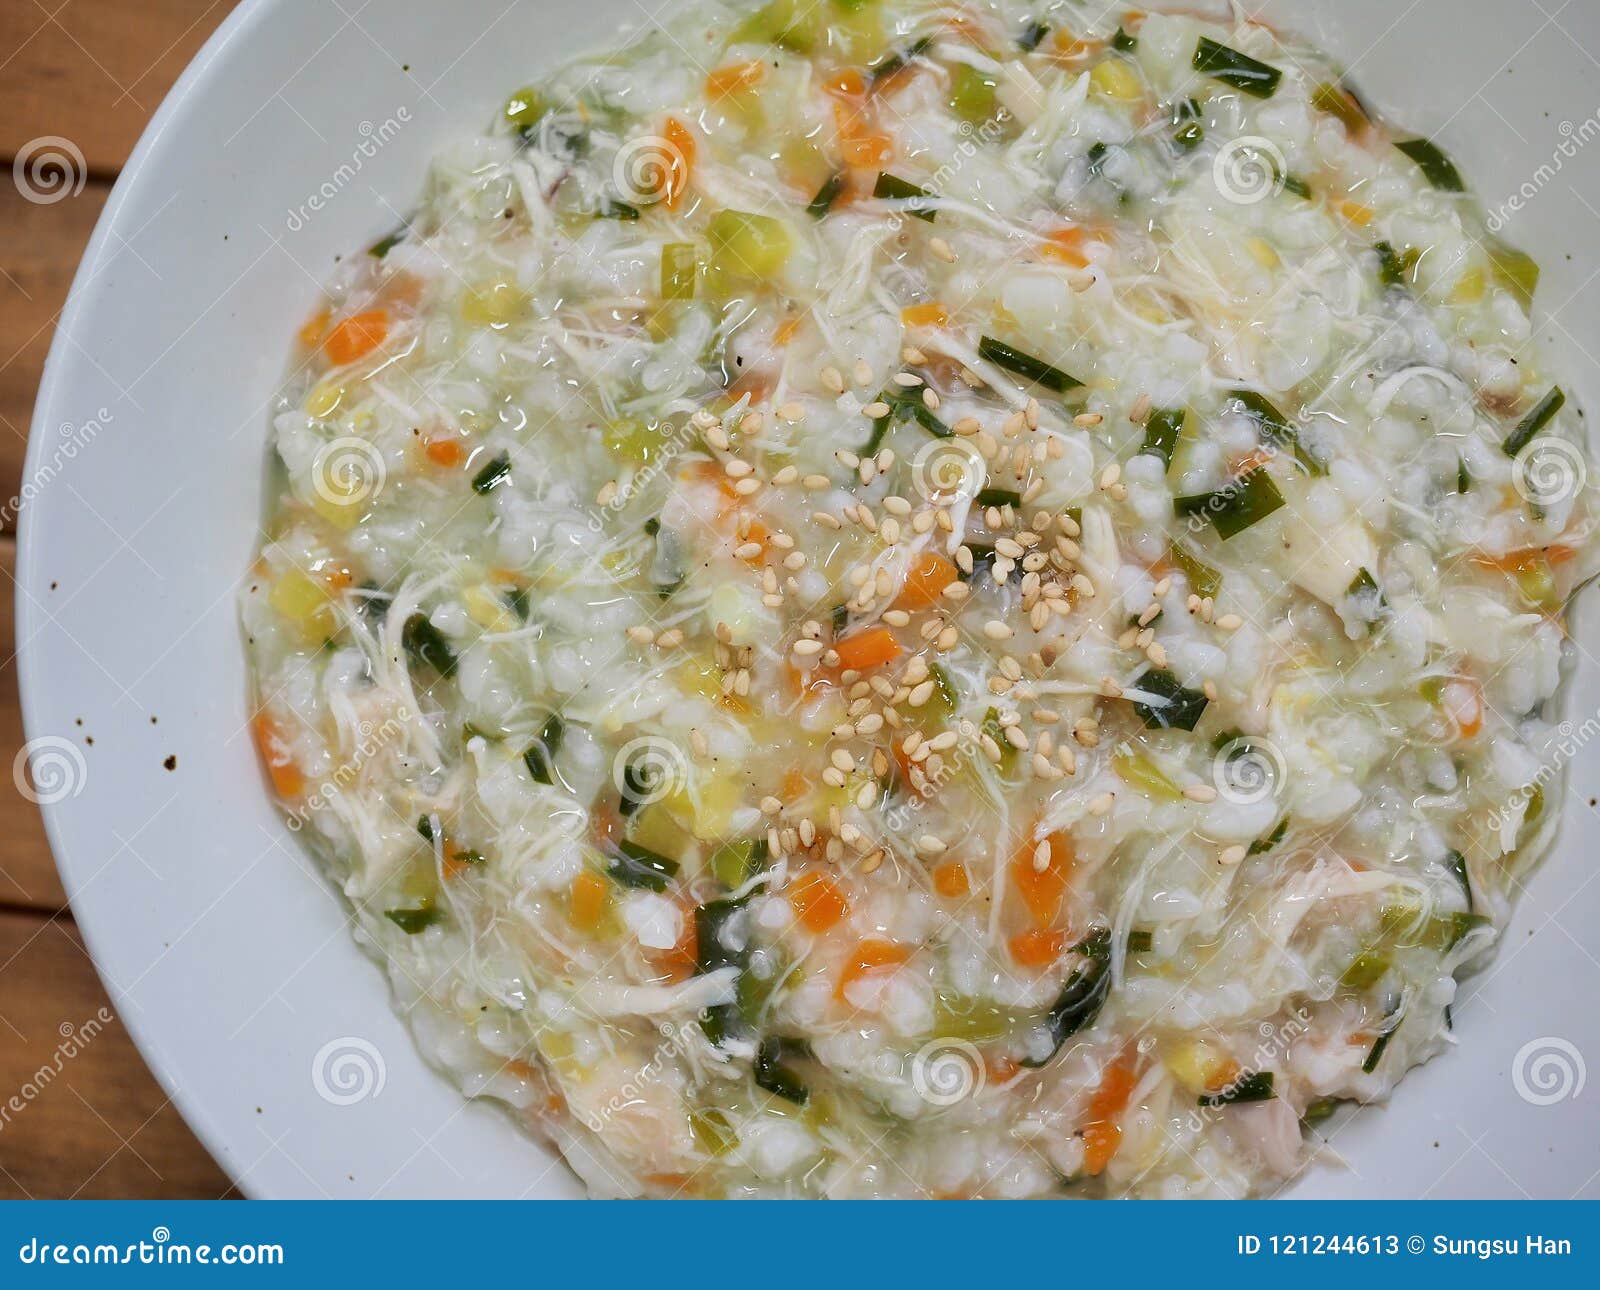 Dak Juk (Korean Chicken and Rice Porridge) Recipe